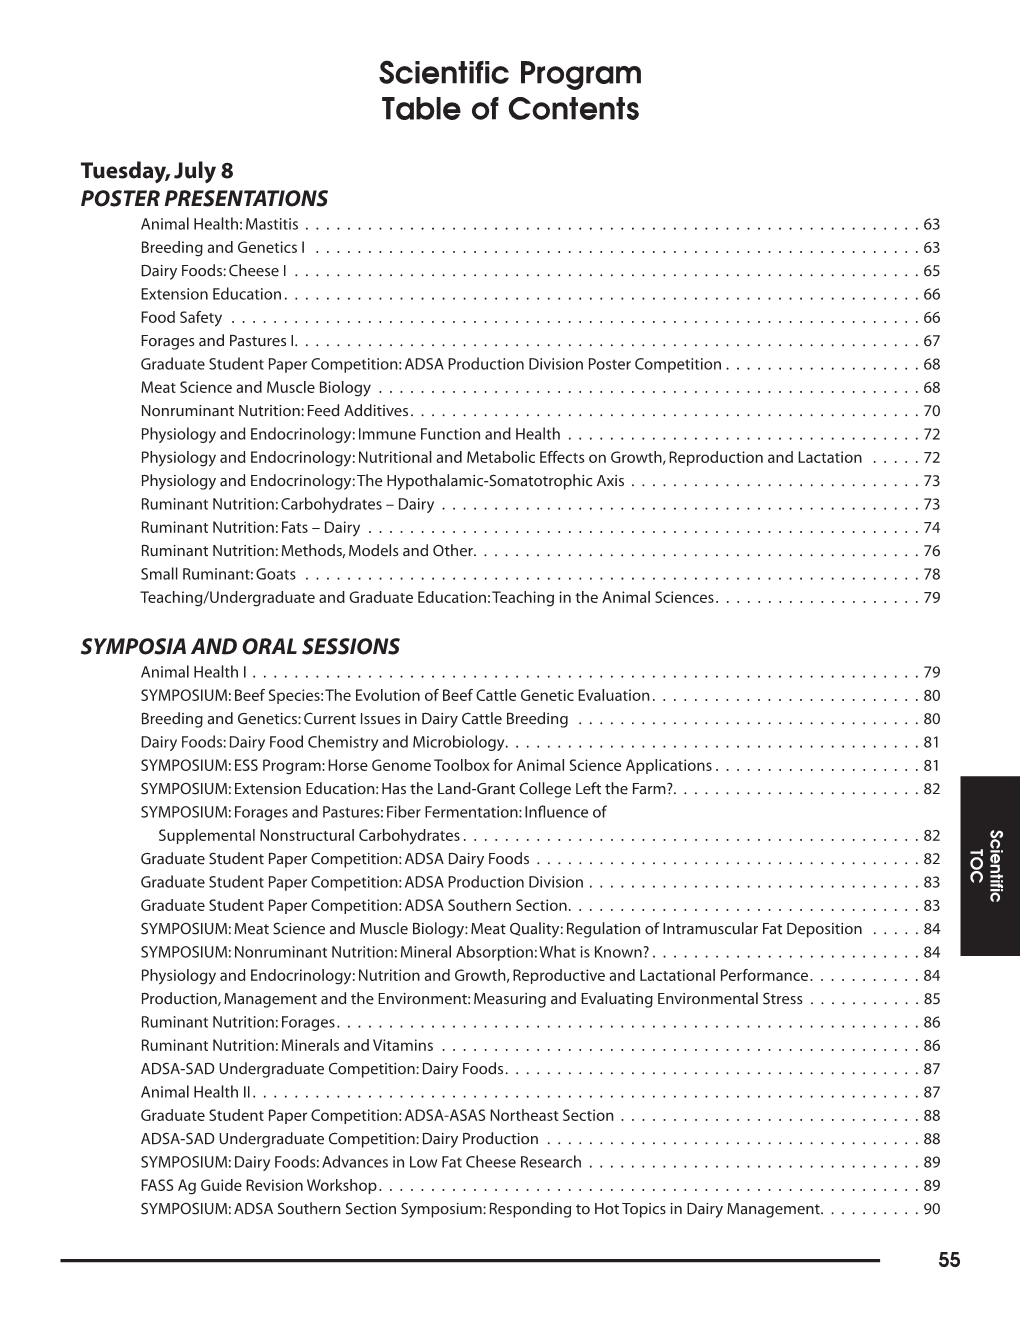 Scientific Program Table of Contents